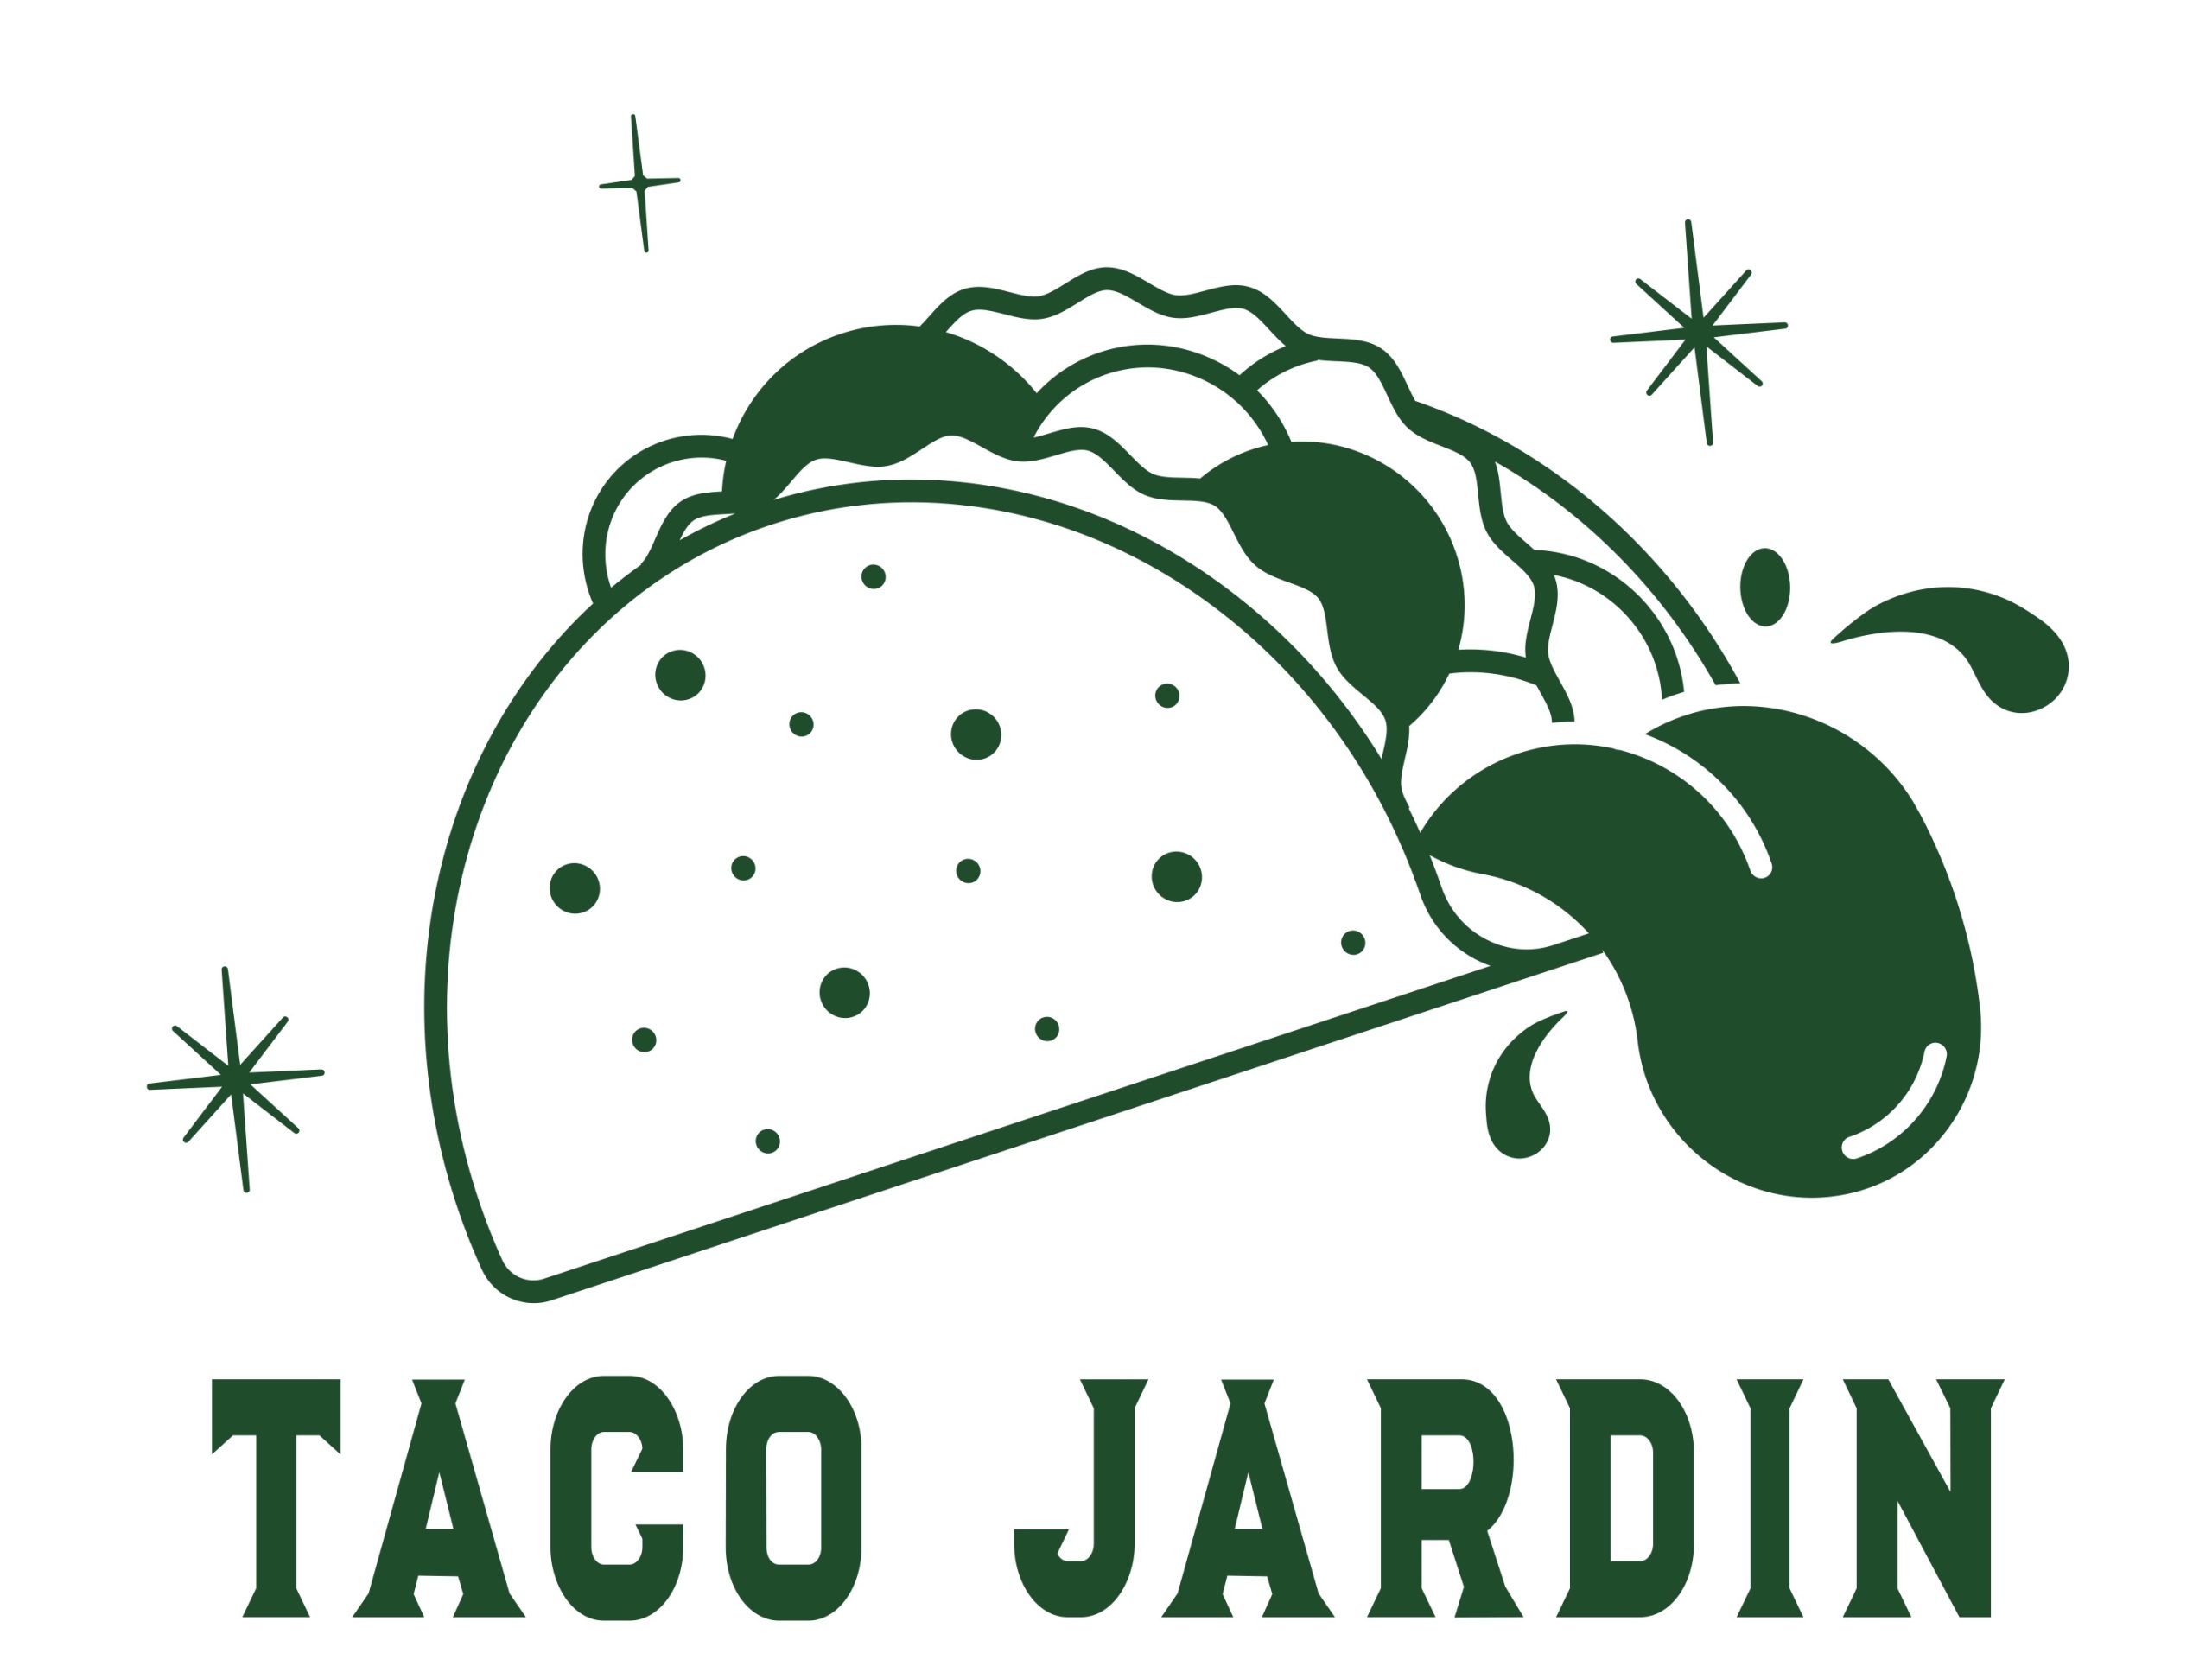 Taco-Jardin-logo